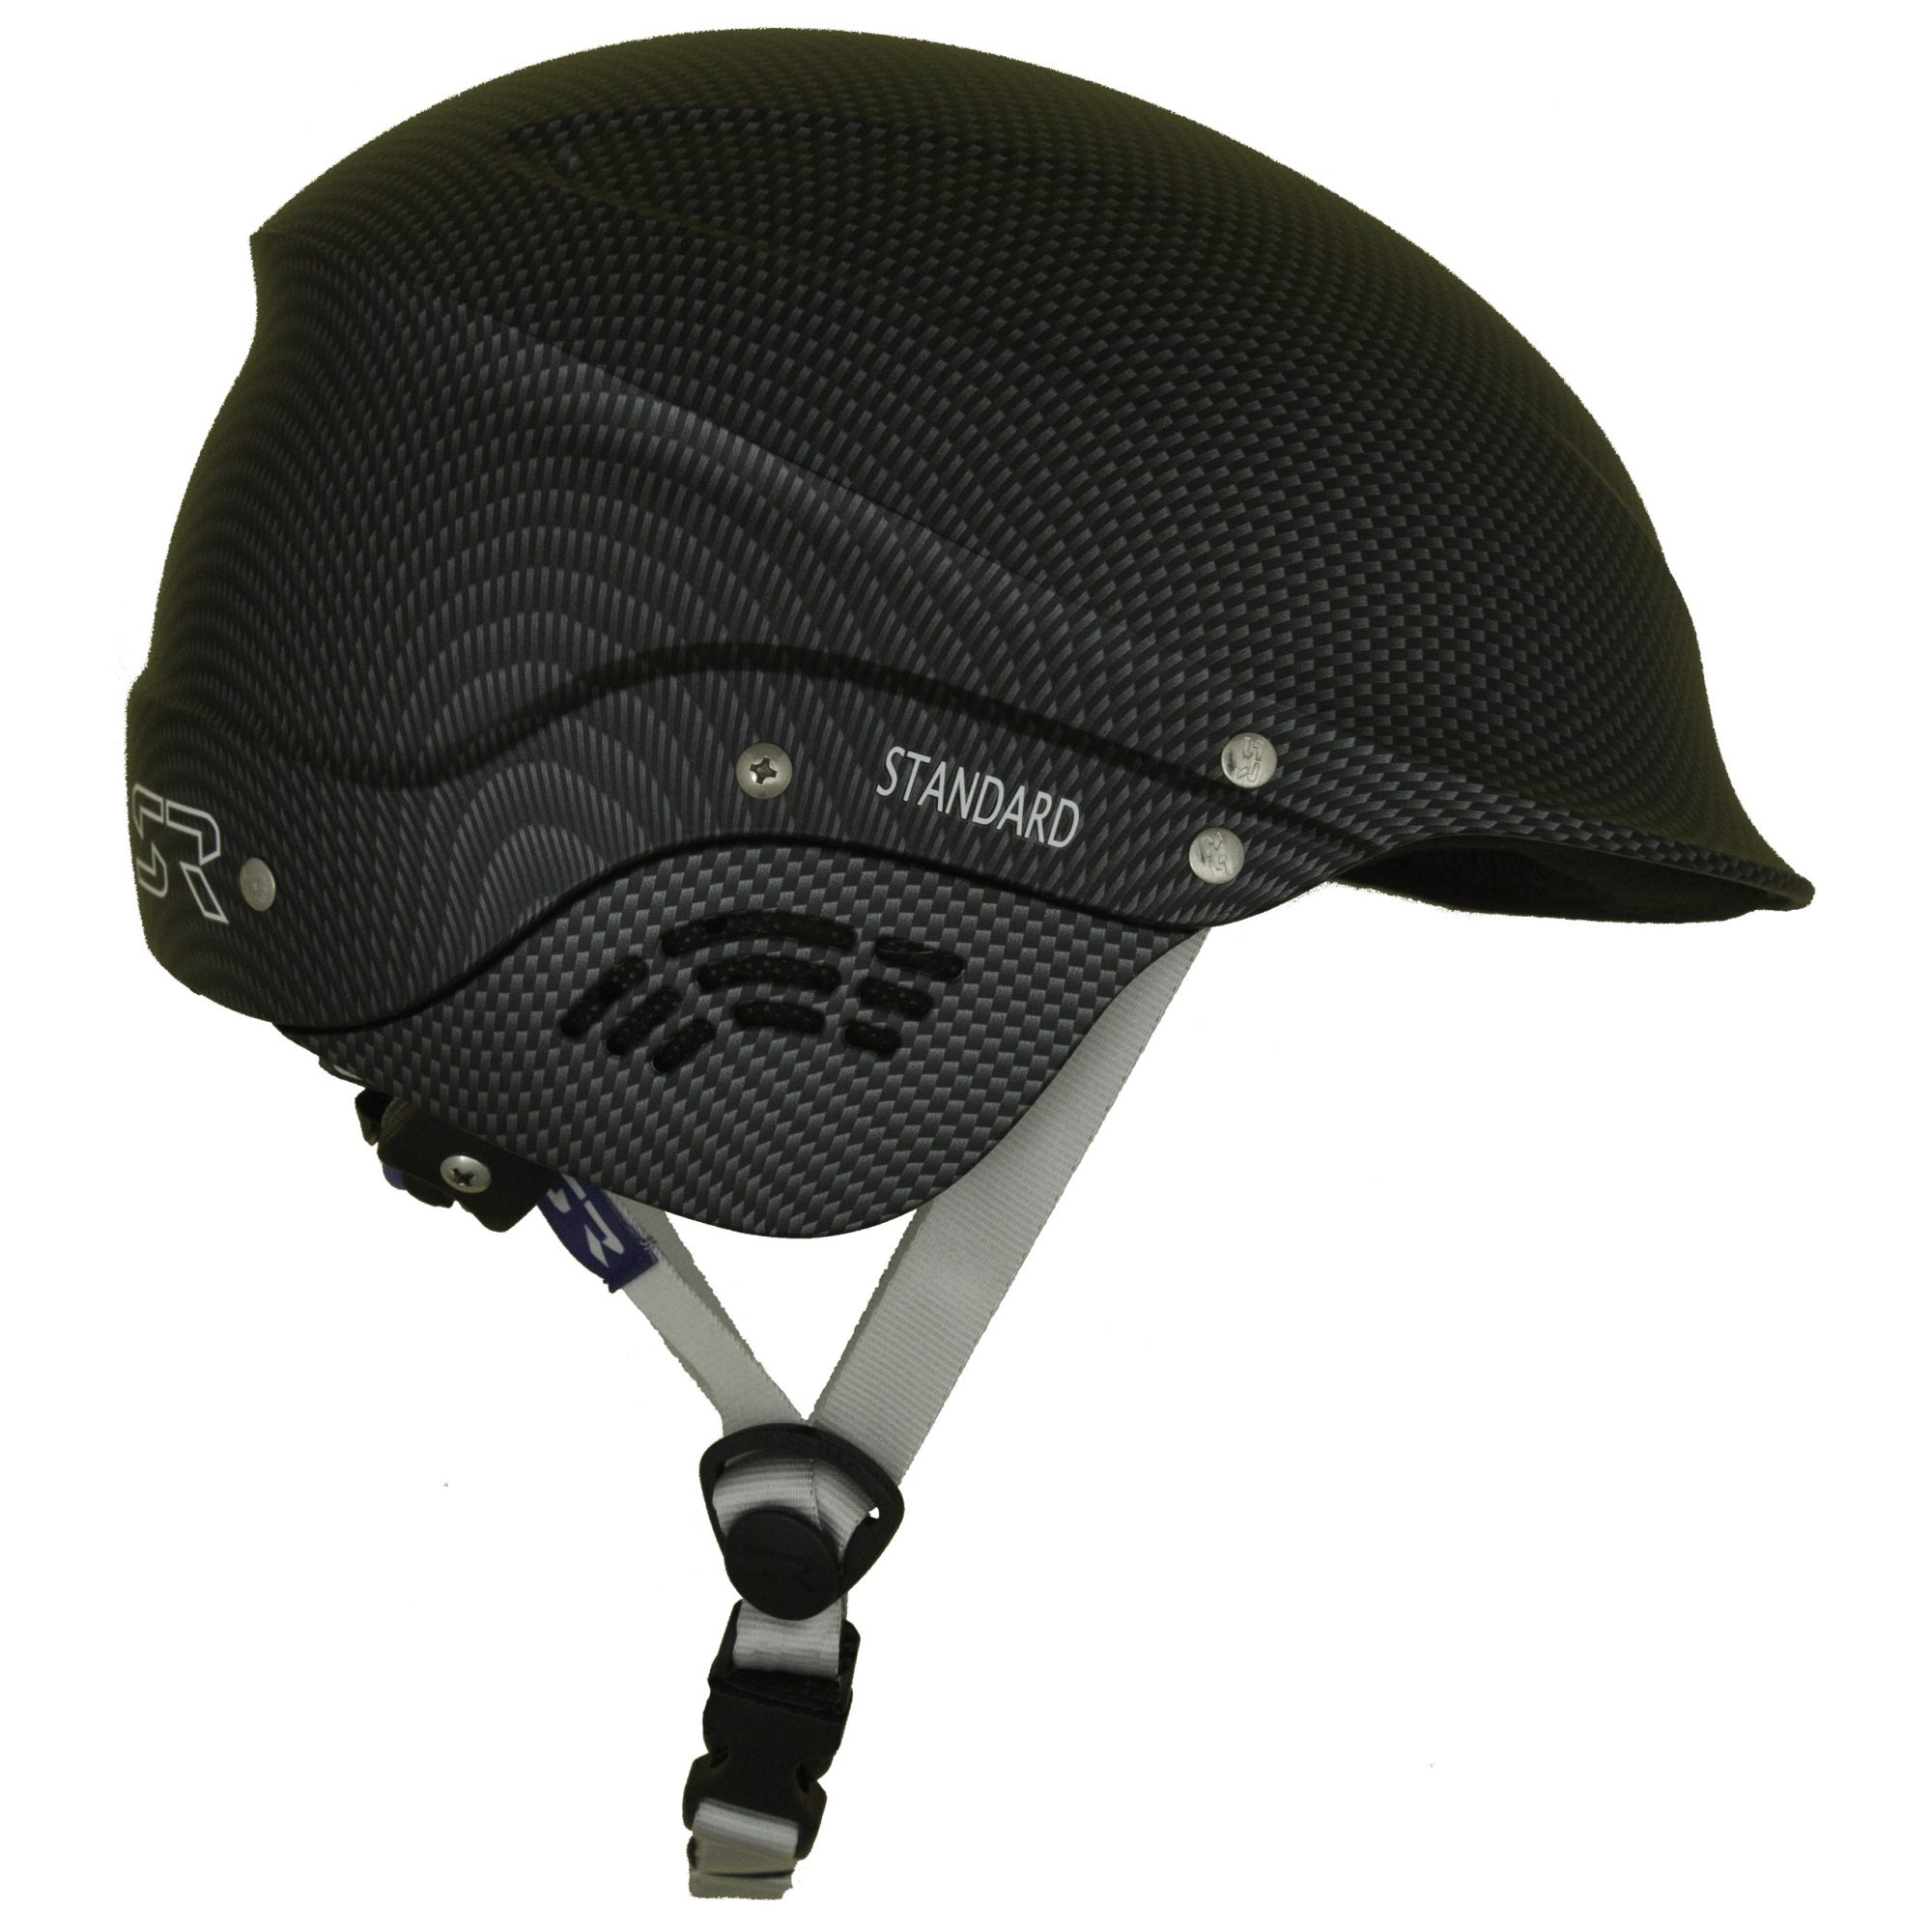 Shred Ready Helmet Sizing Chart